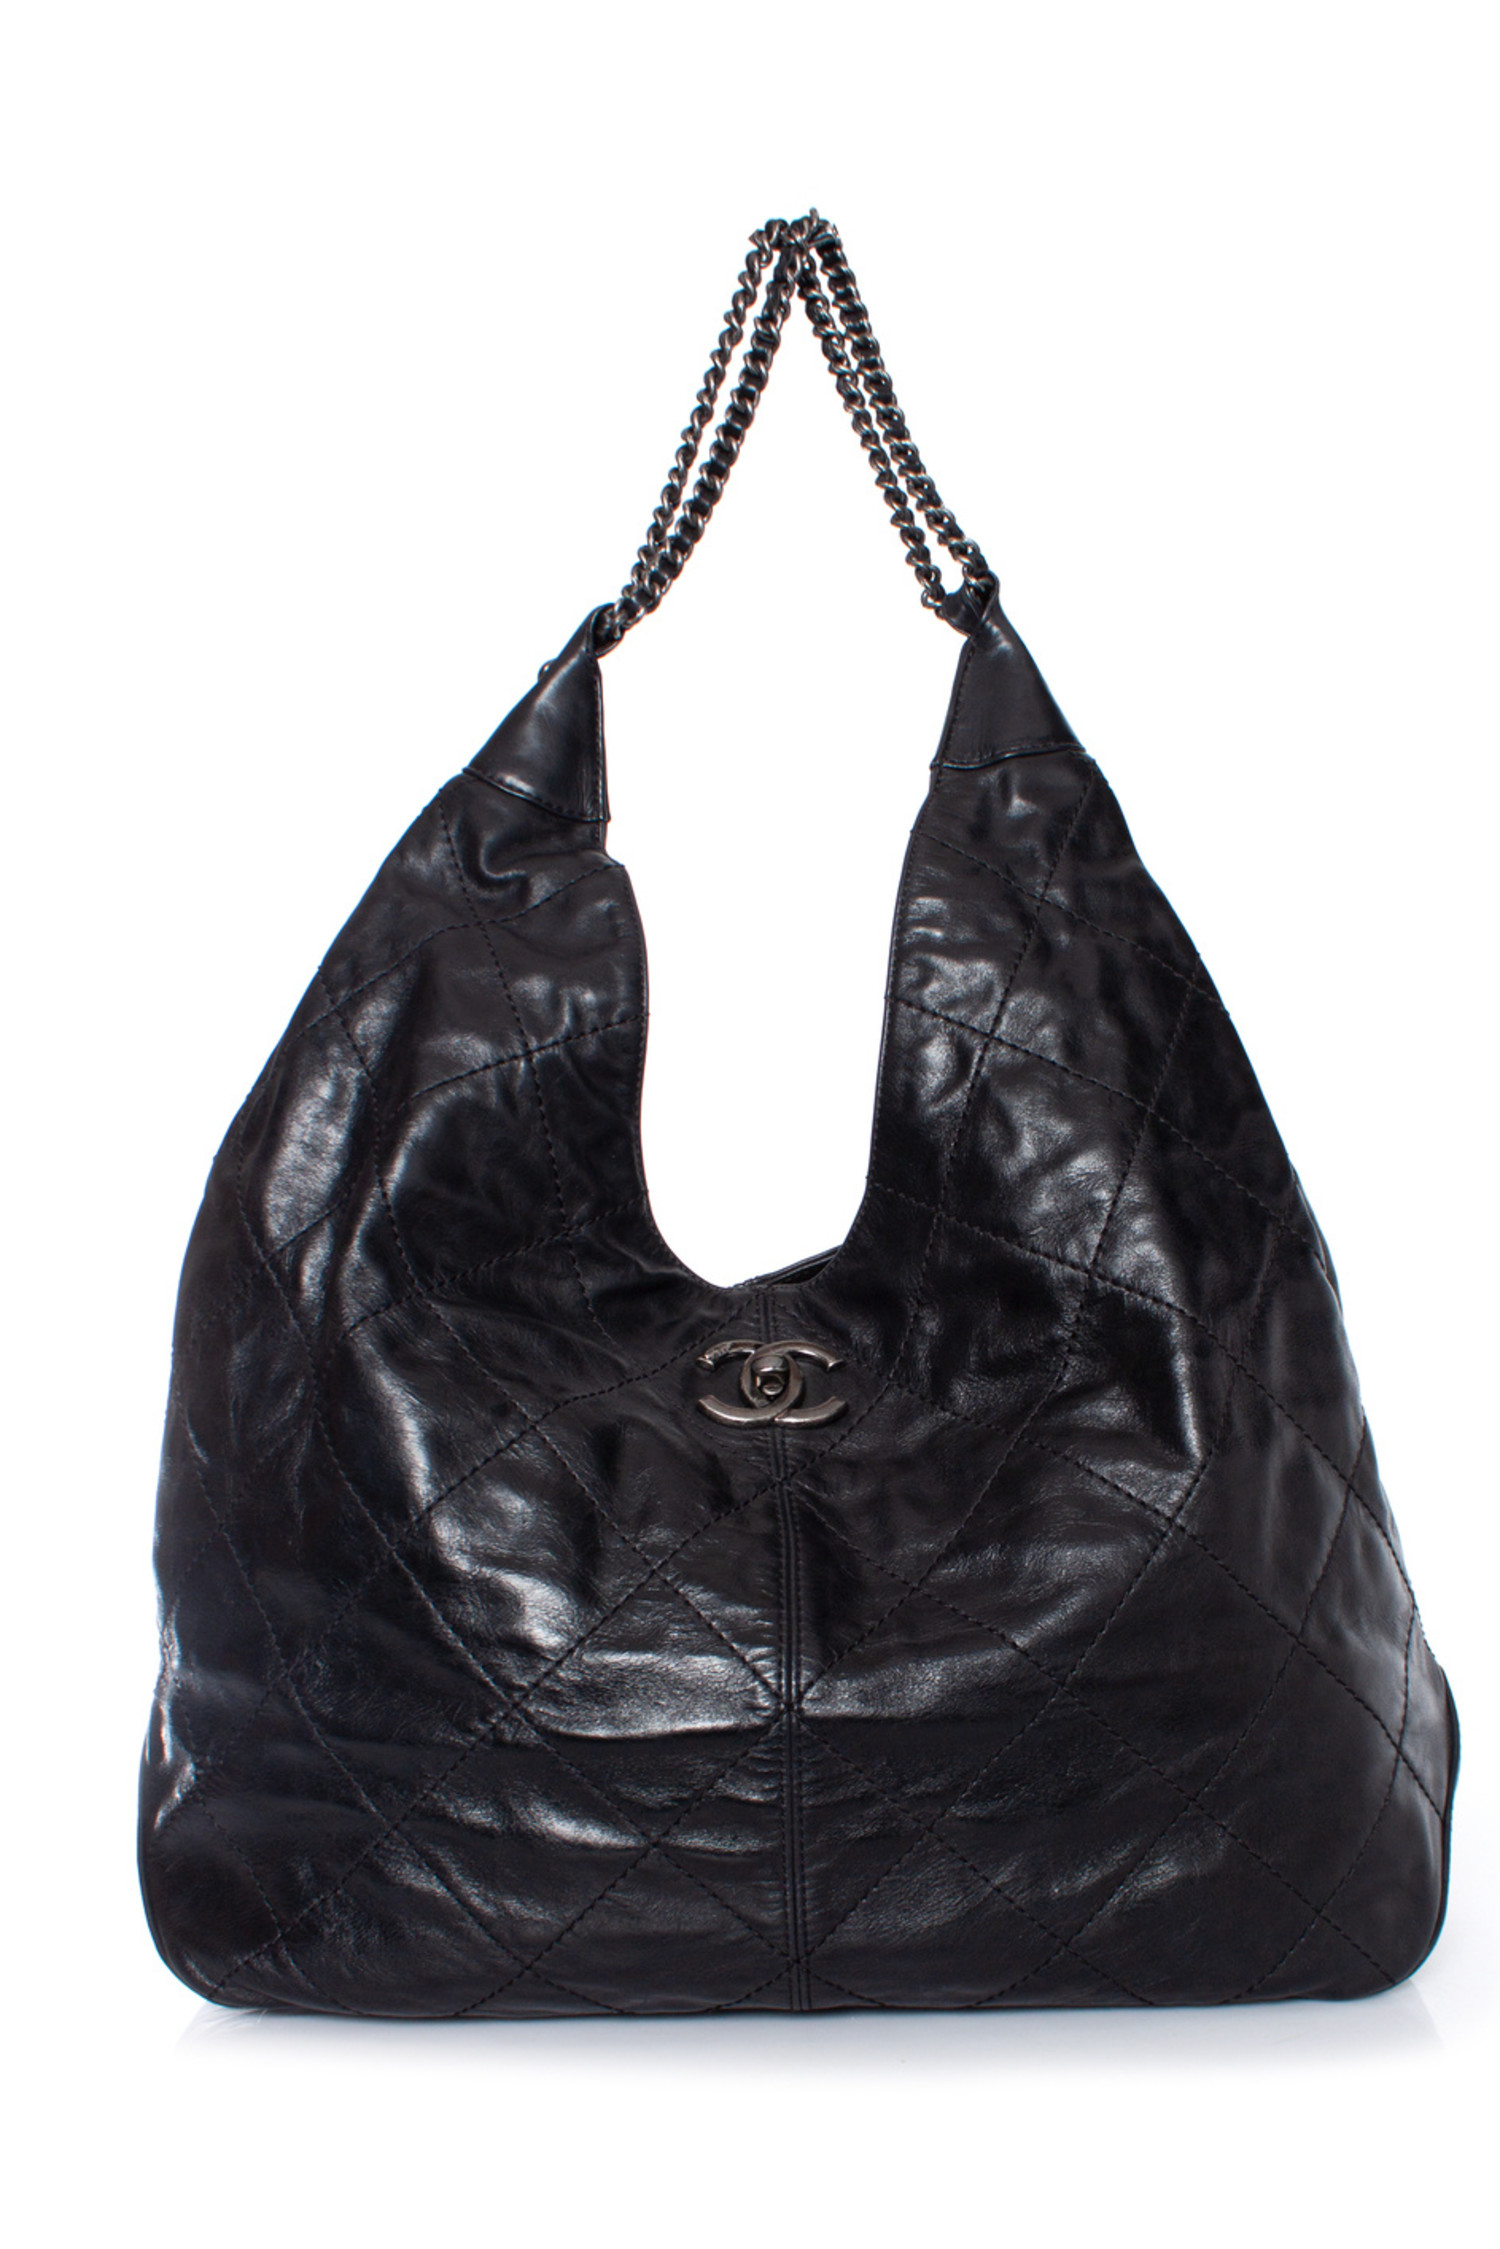 Chanel, leather hobo bag - Unique Designer Pieces